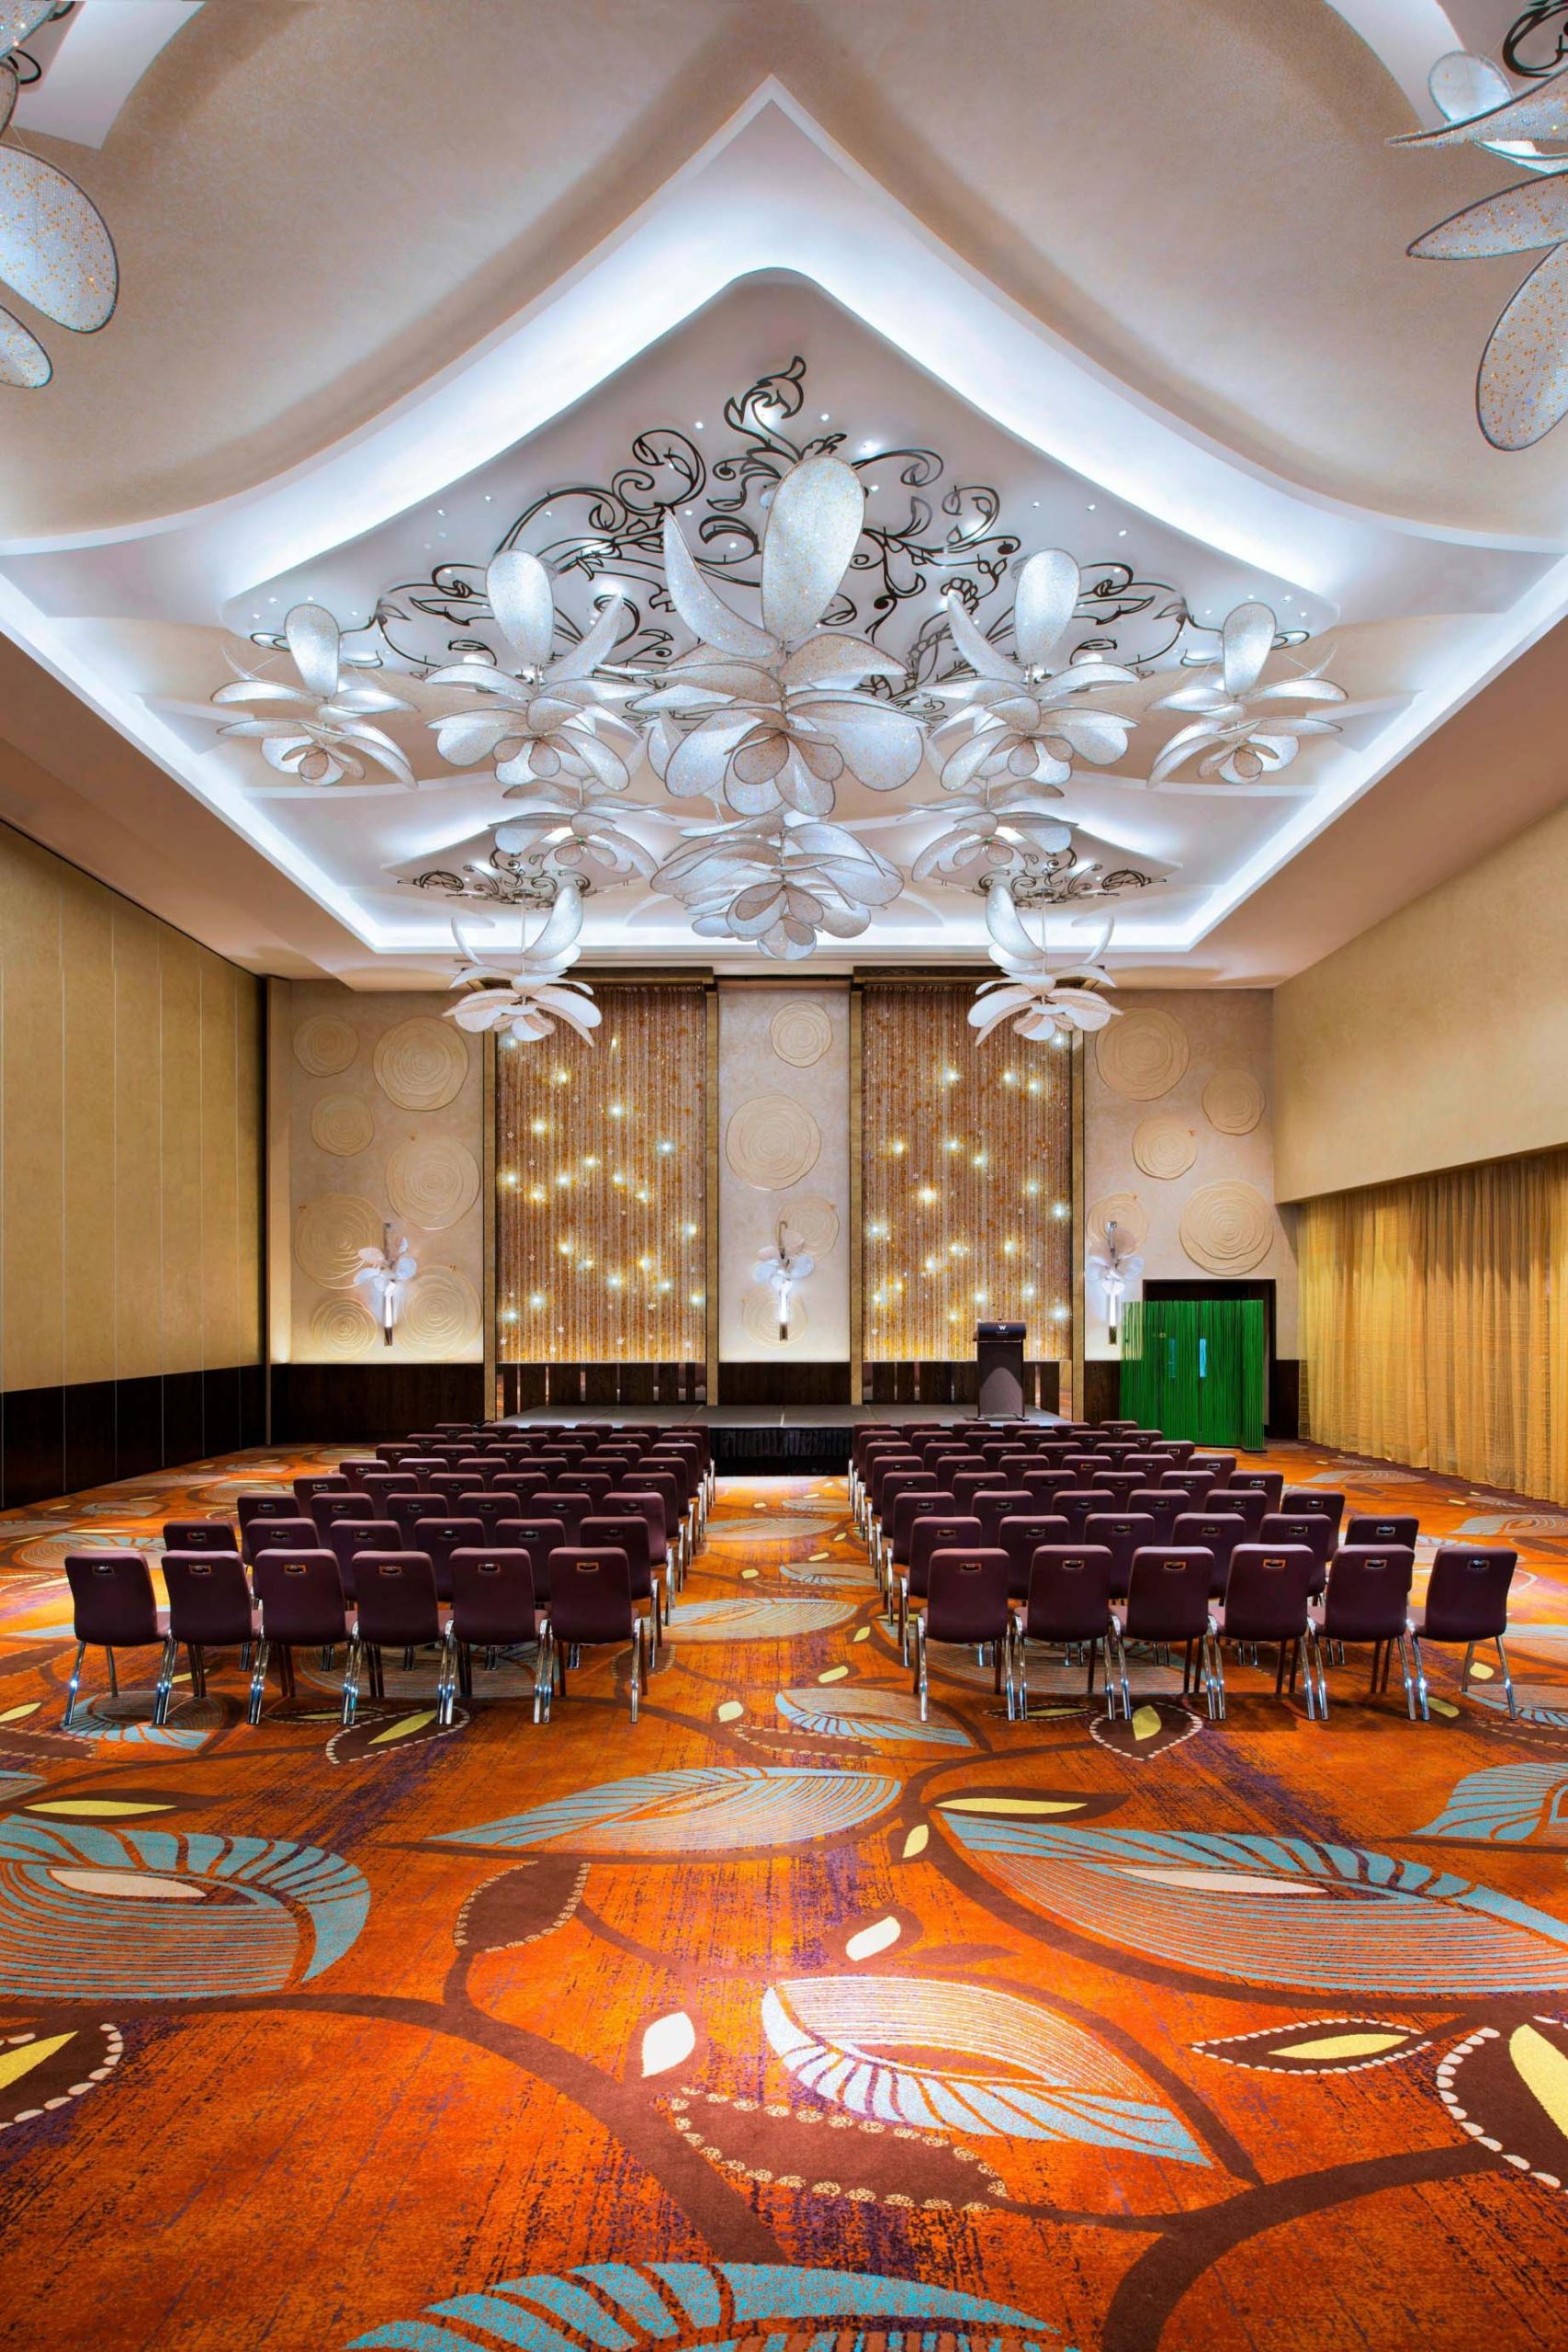 W Singapore Sentosa Cove Hotel – Singapore – Great Room Theatre Seating